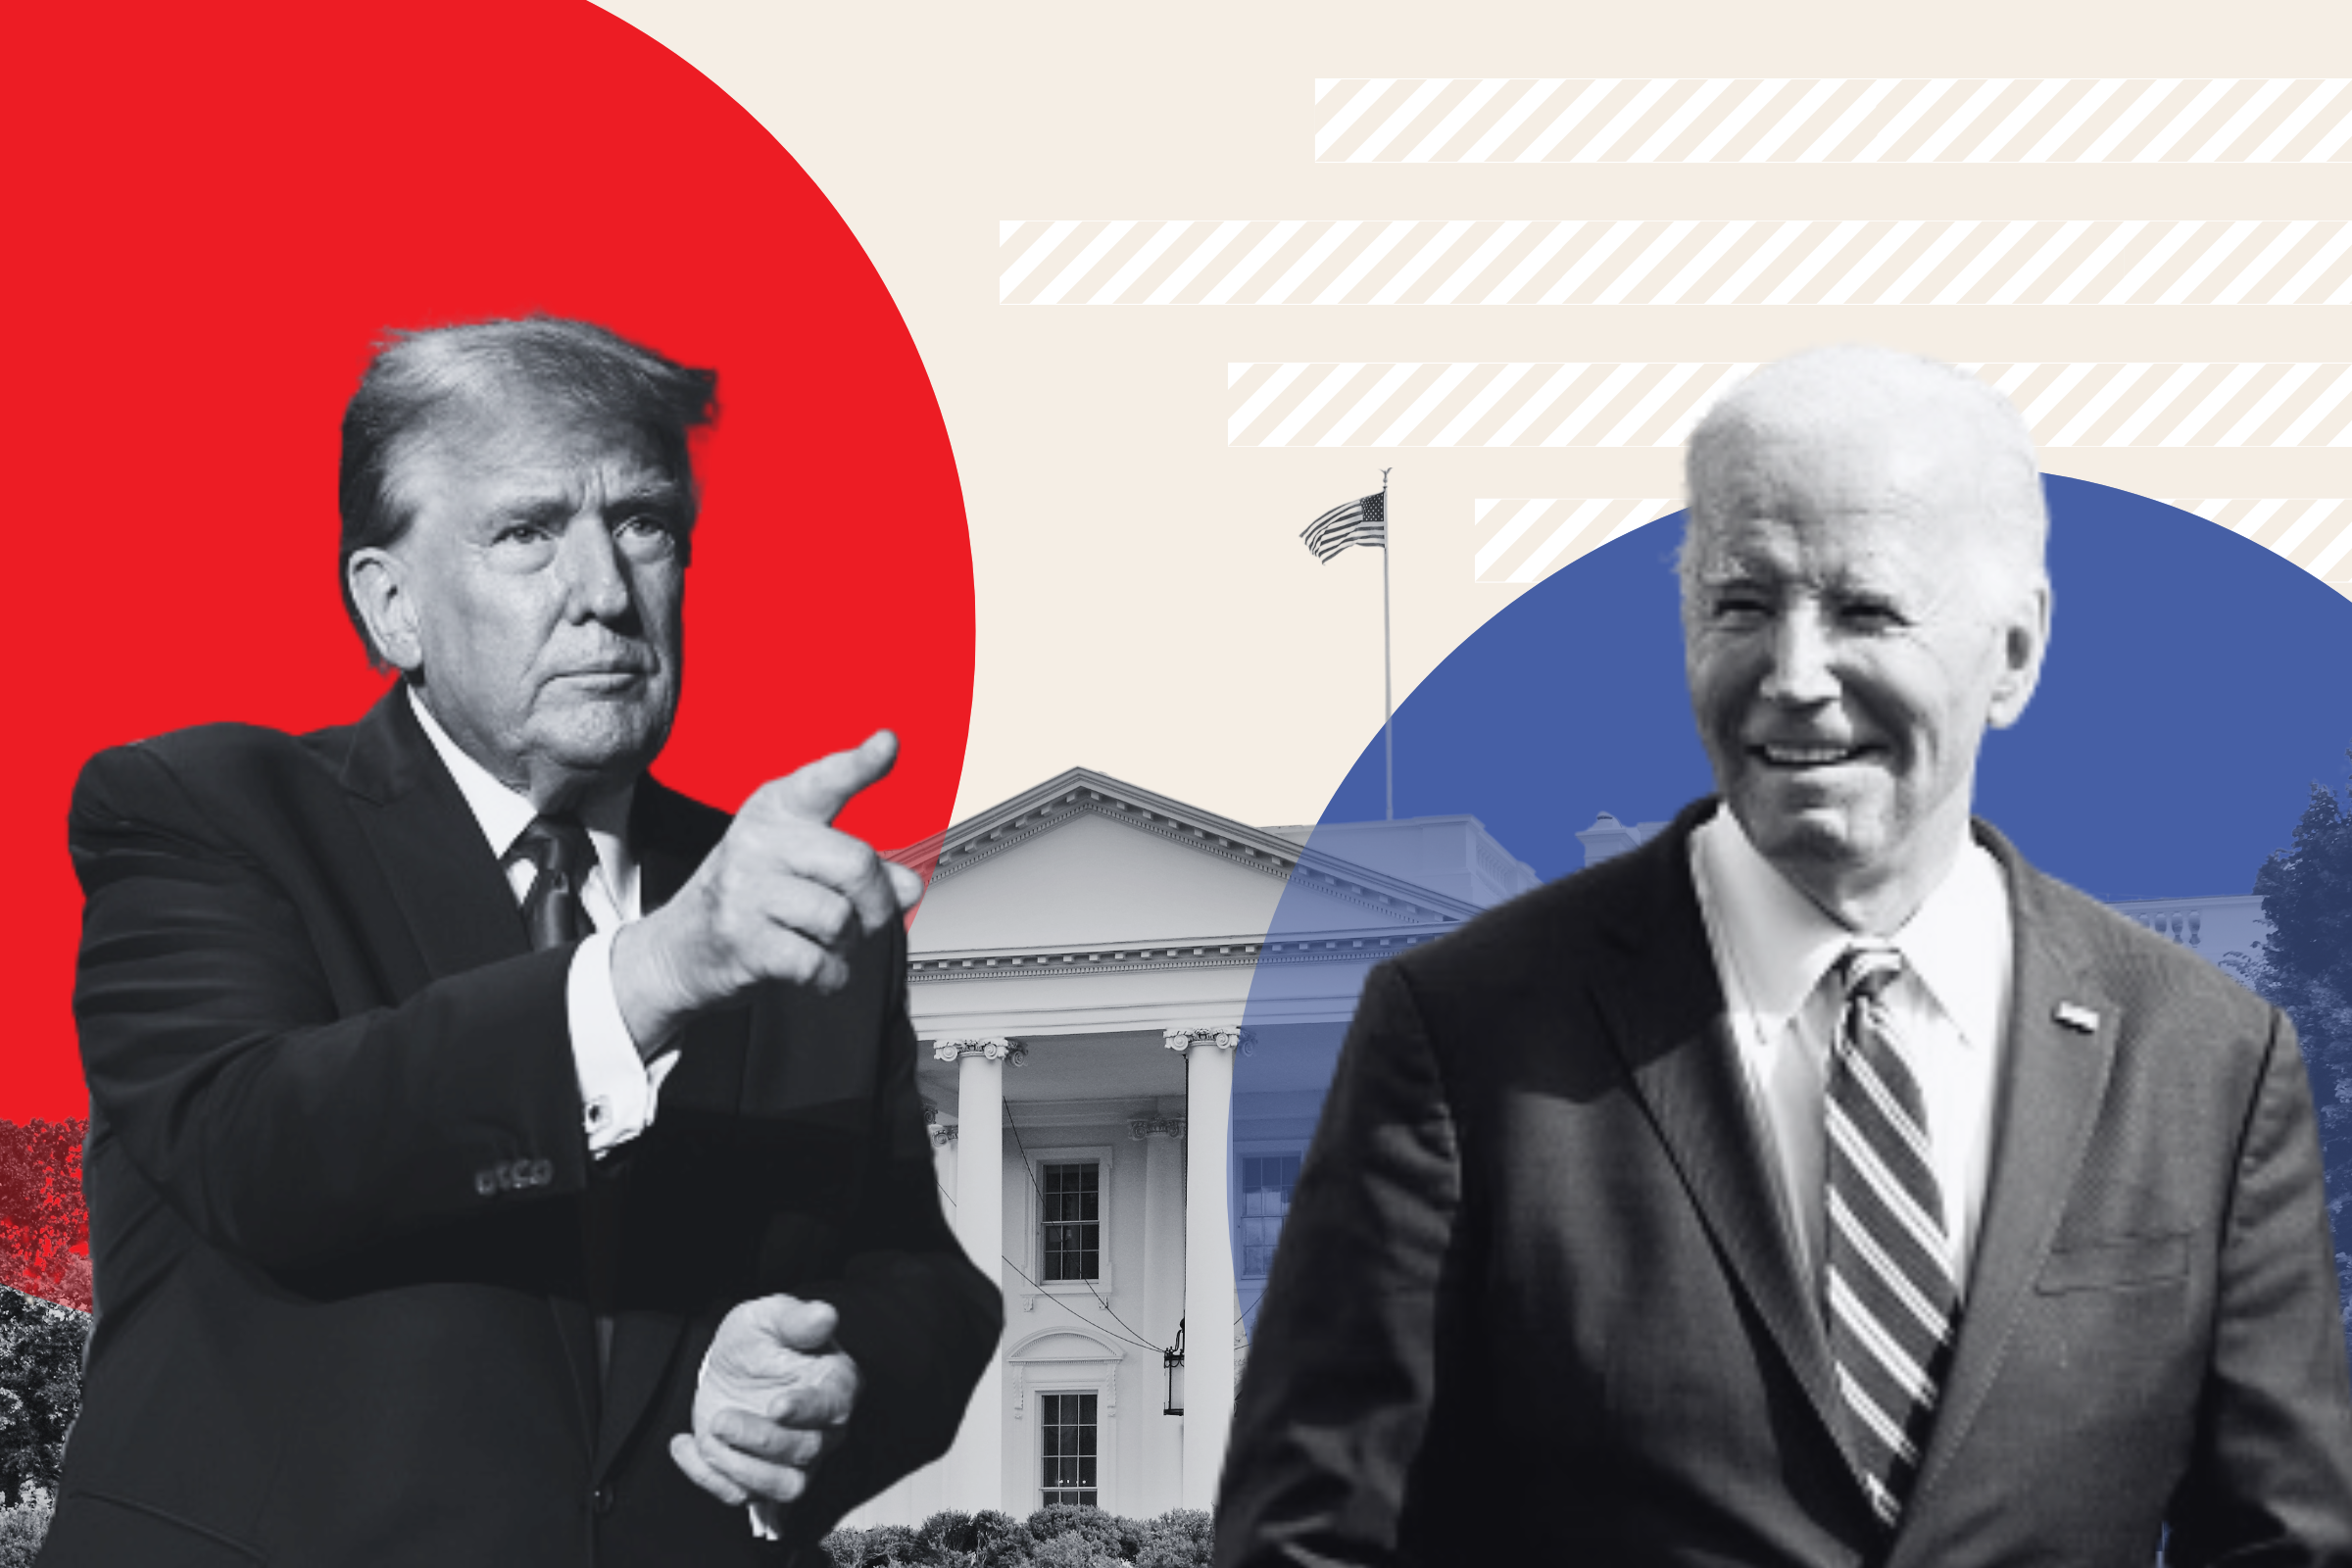 Joe Biden crushes Donald Trump in new swing state poll